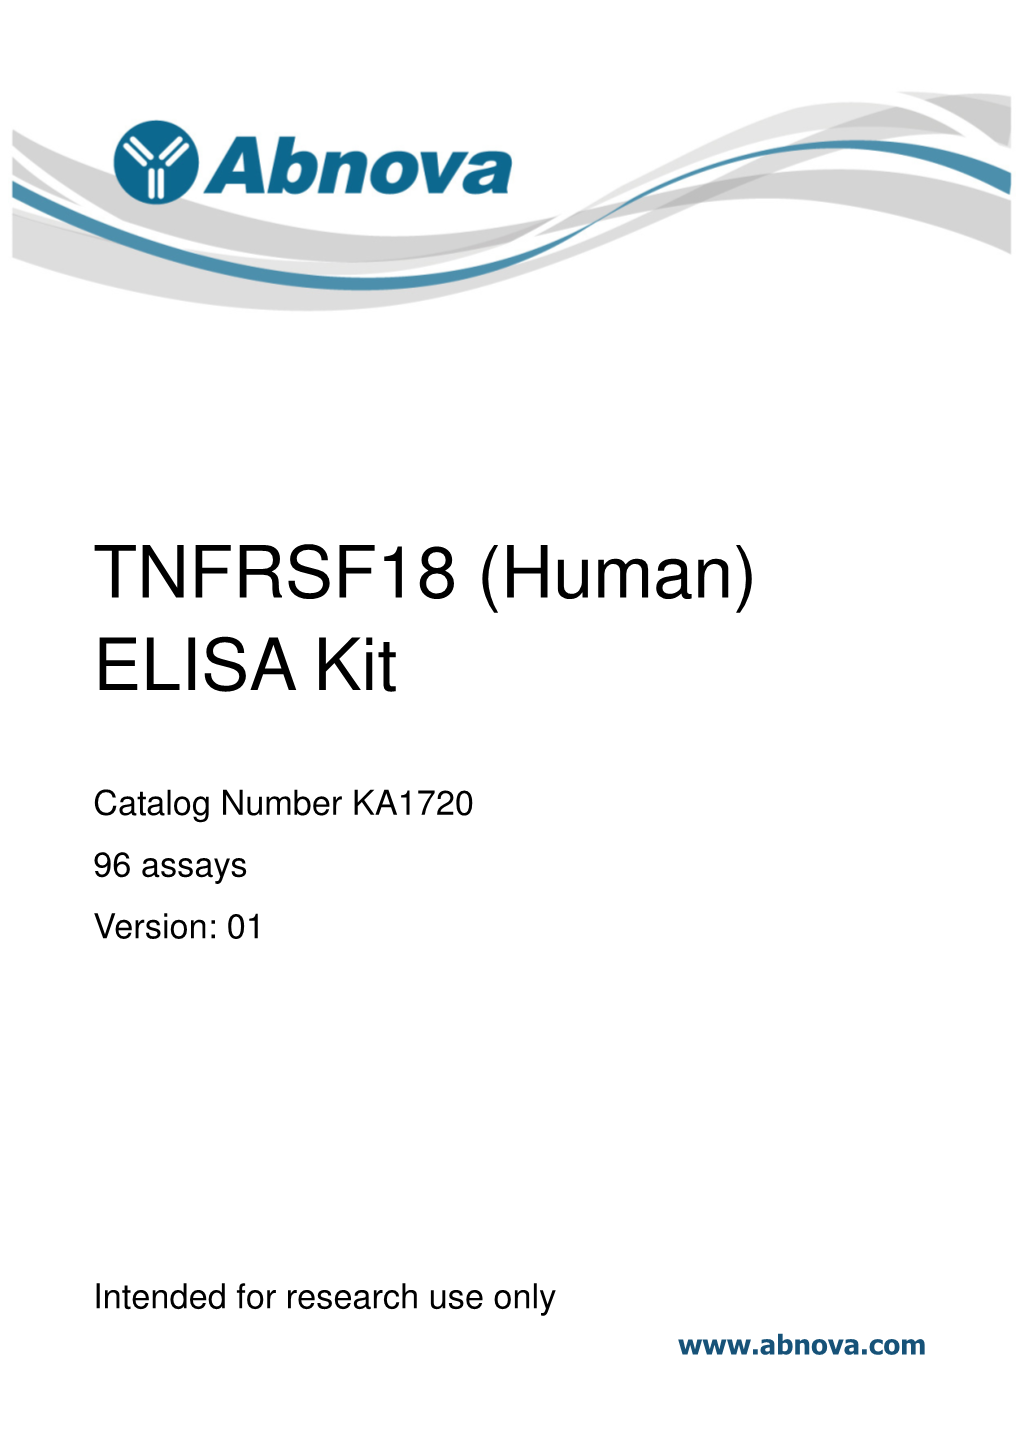 TNFRSF18 (Human) ELISA Kit